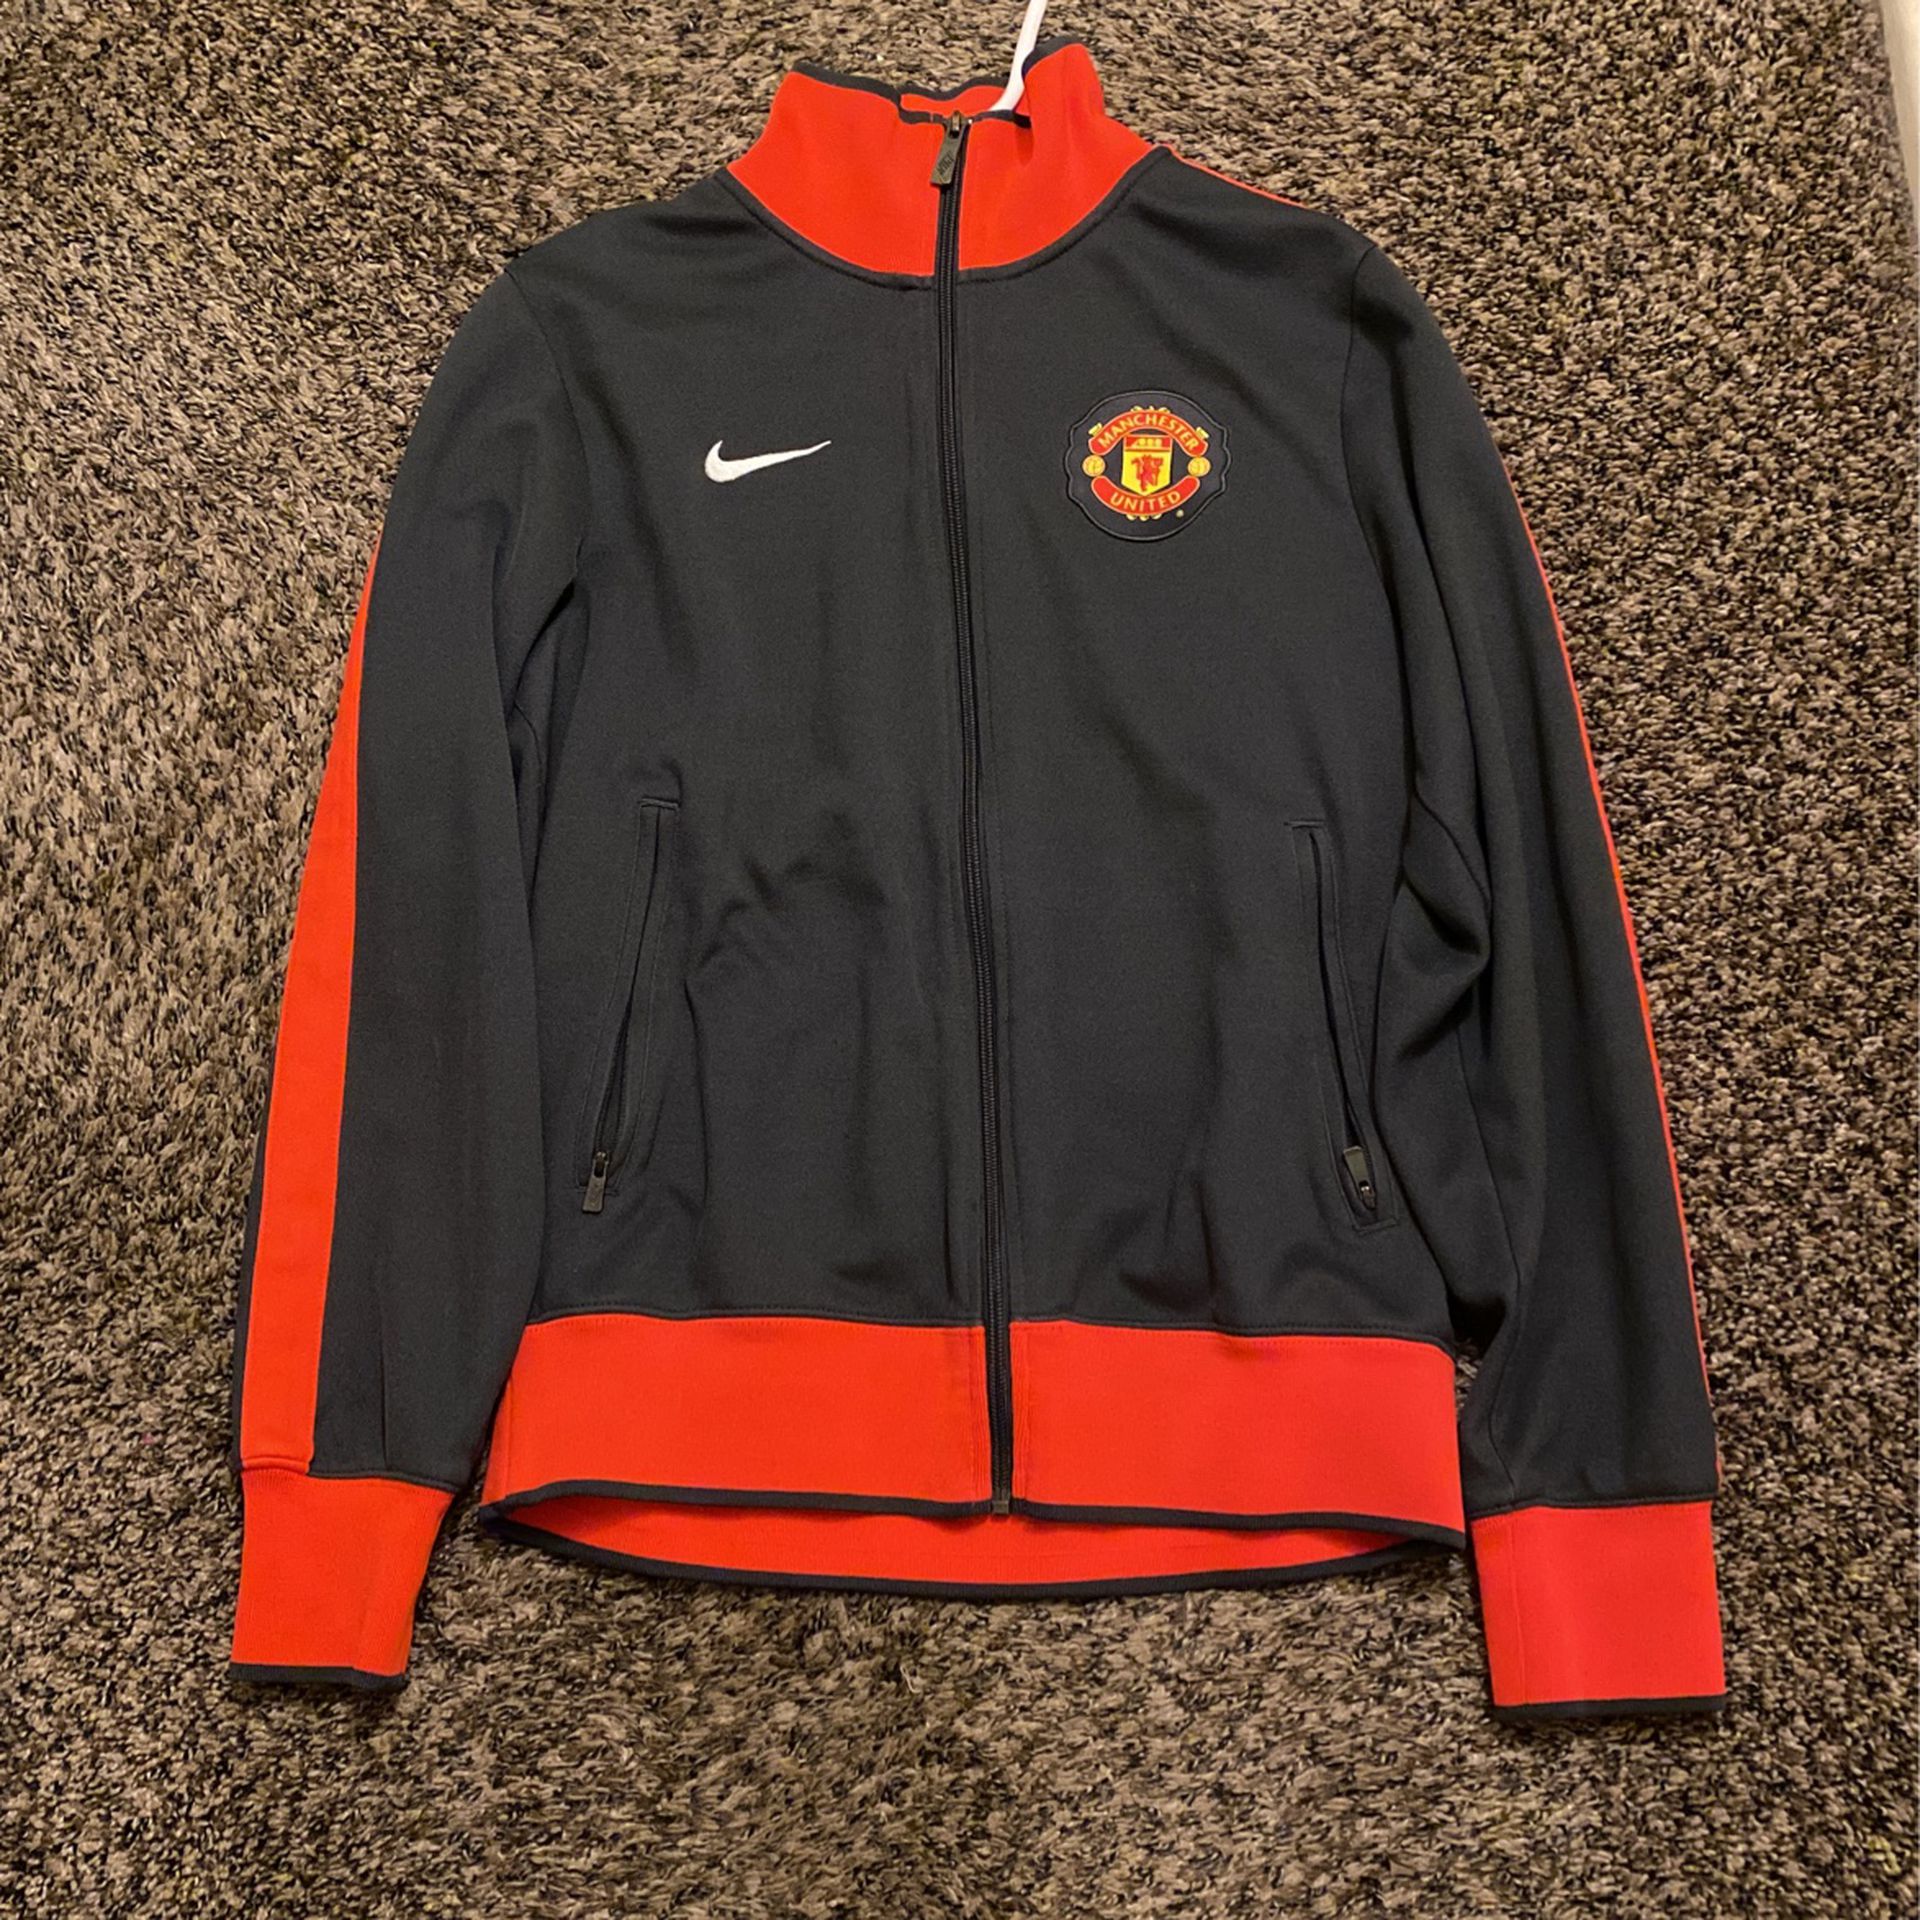 krekel Opera Shinkan Nike Manchester United Jacket Size Small for Sale in Dinuba, CA - OfferUp